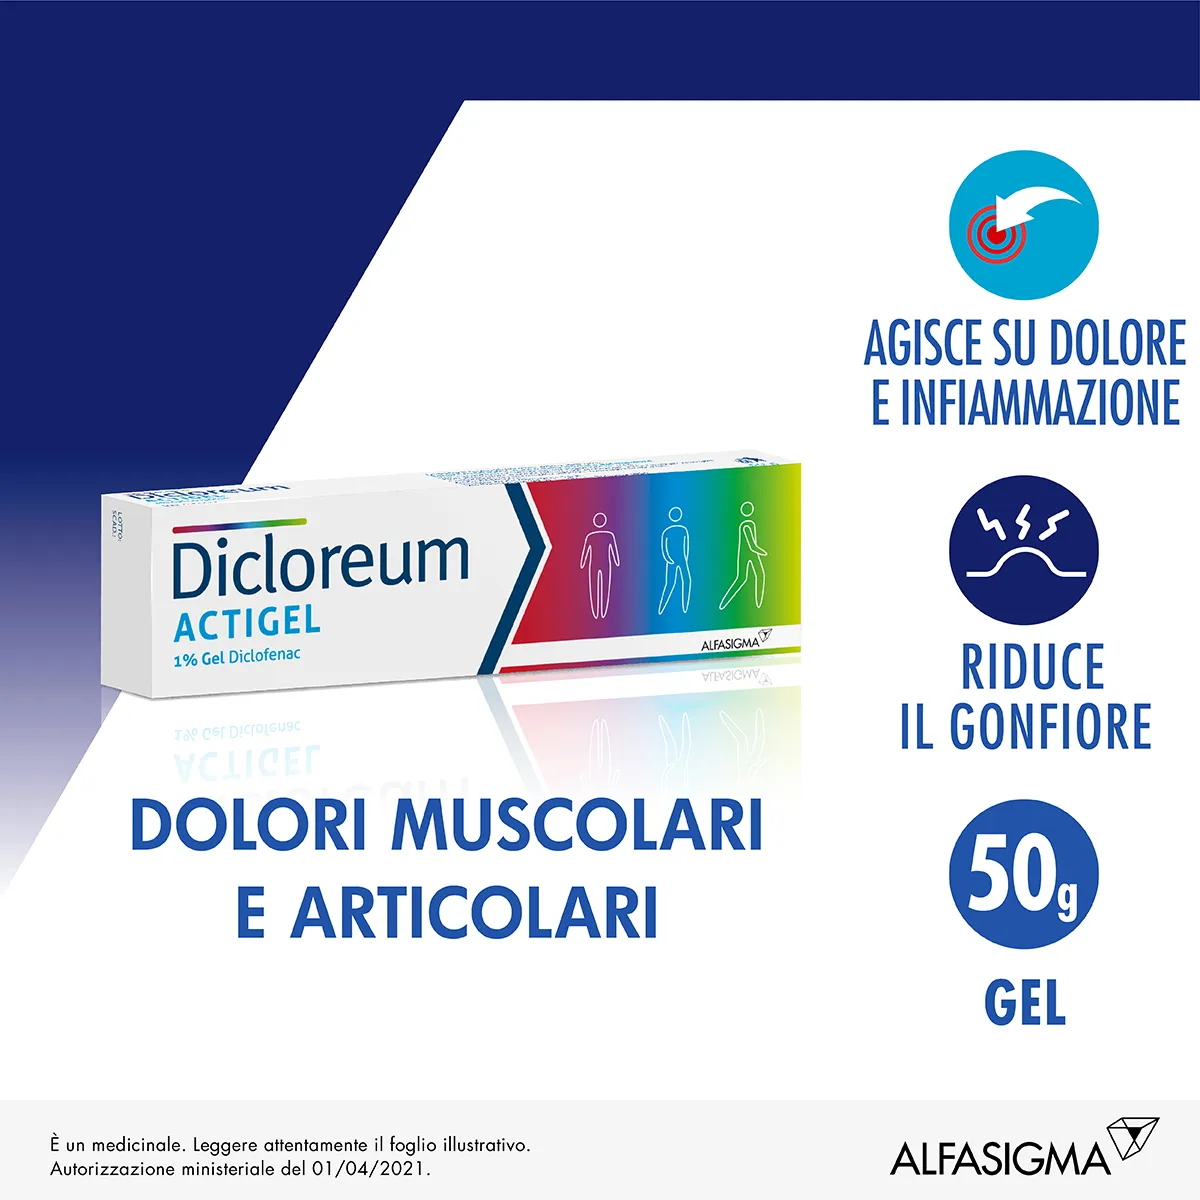 Dicloreum Actigel 1% Diclofenac Gel 50 g Dolori Articolari